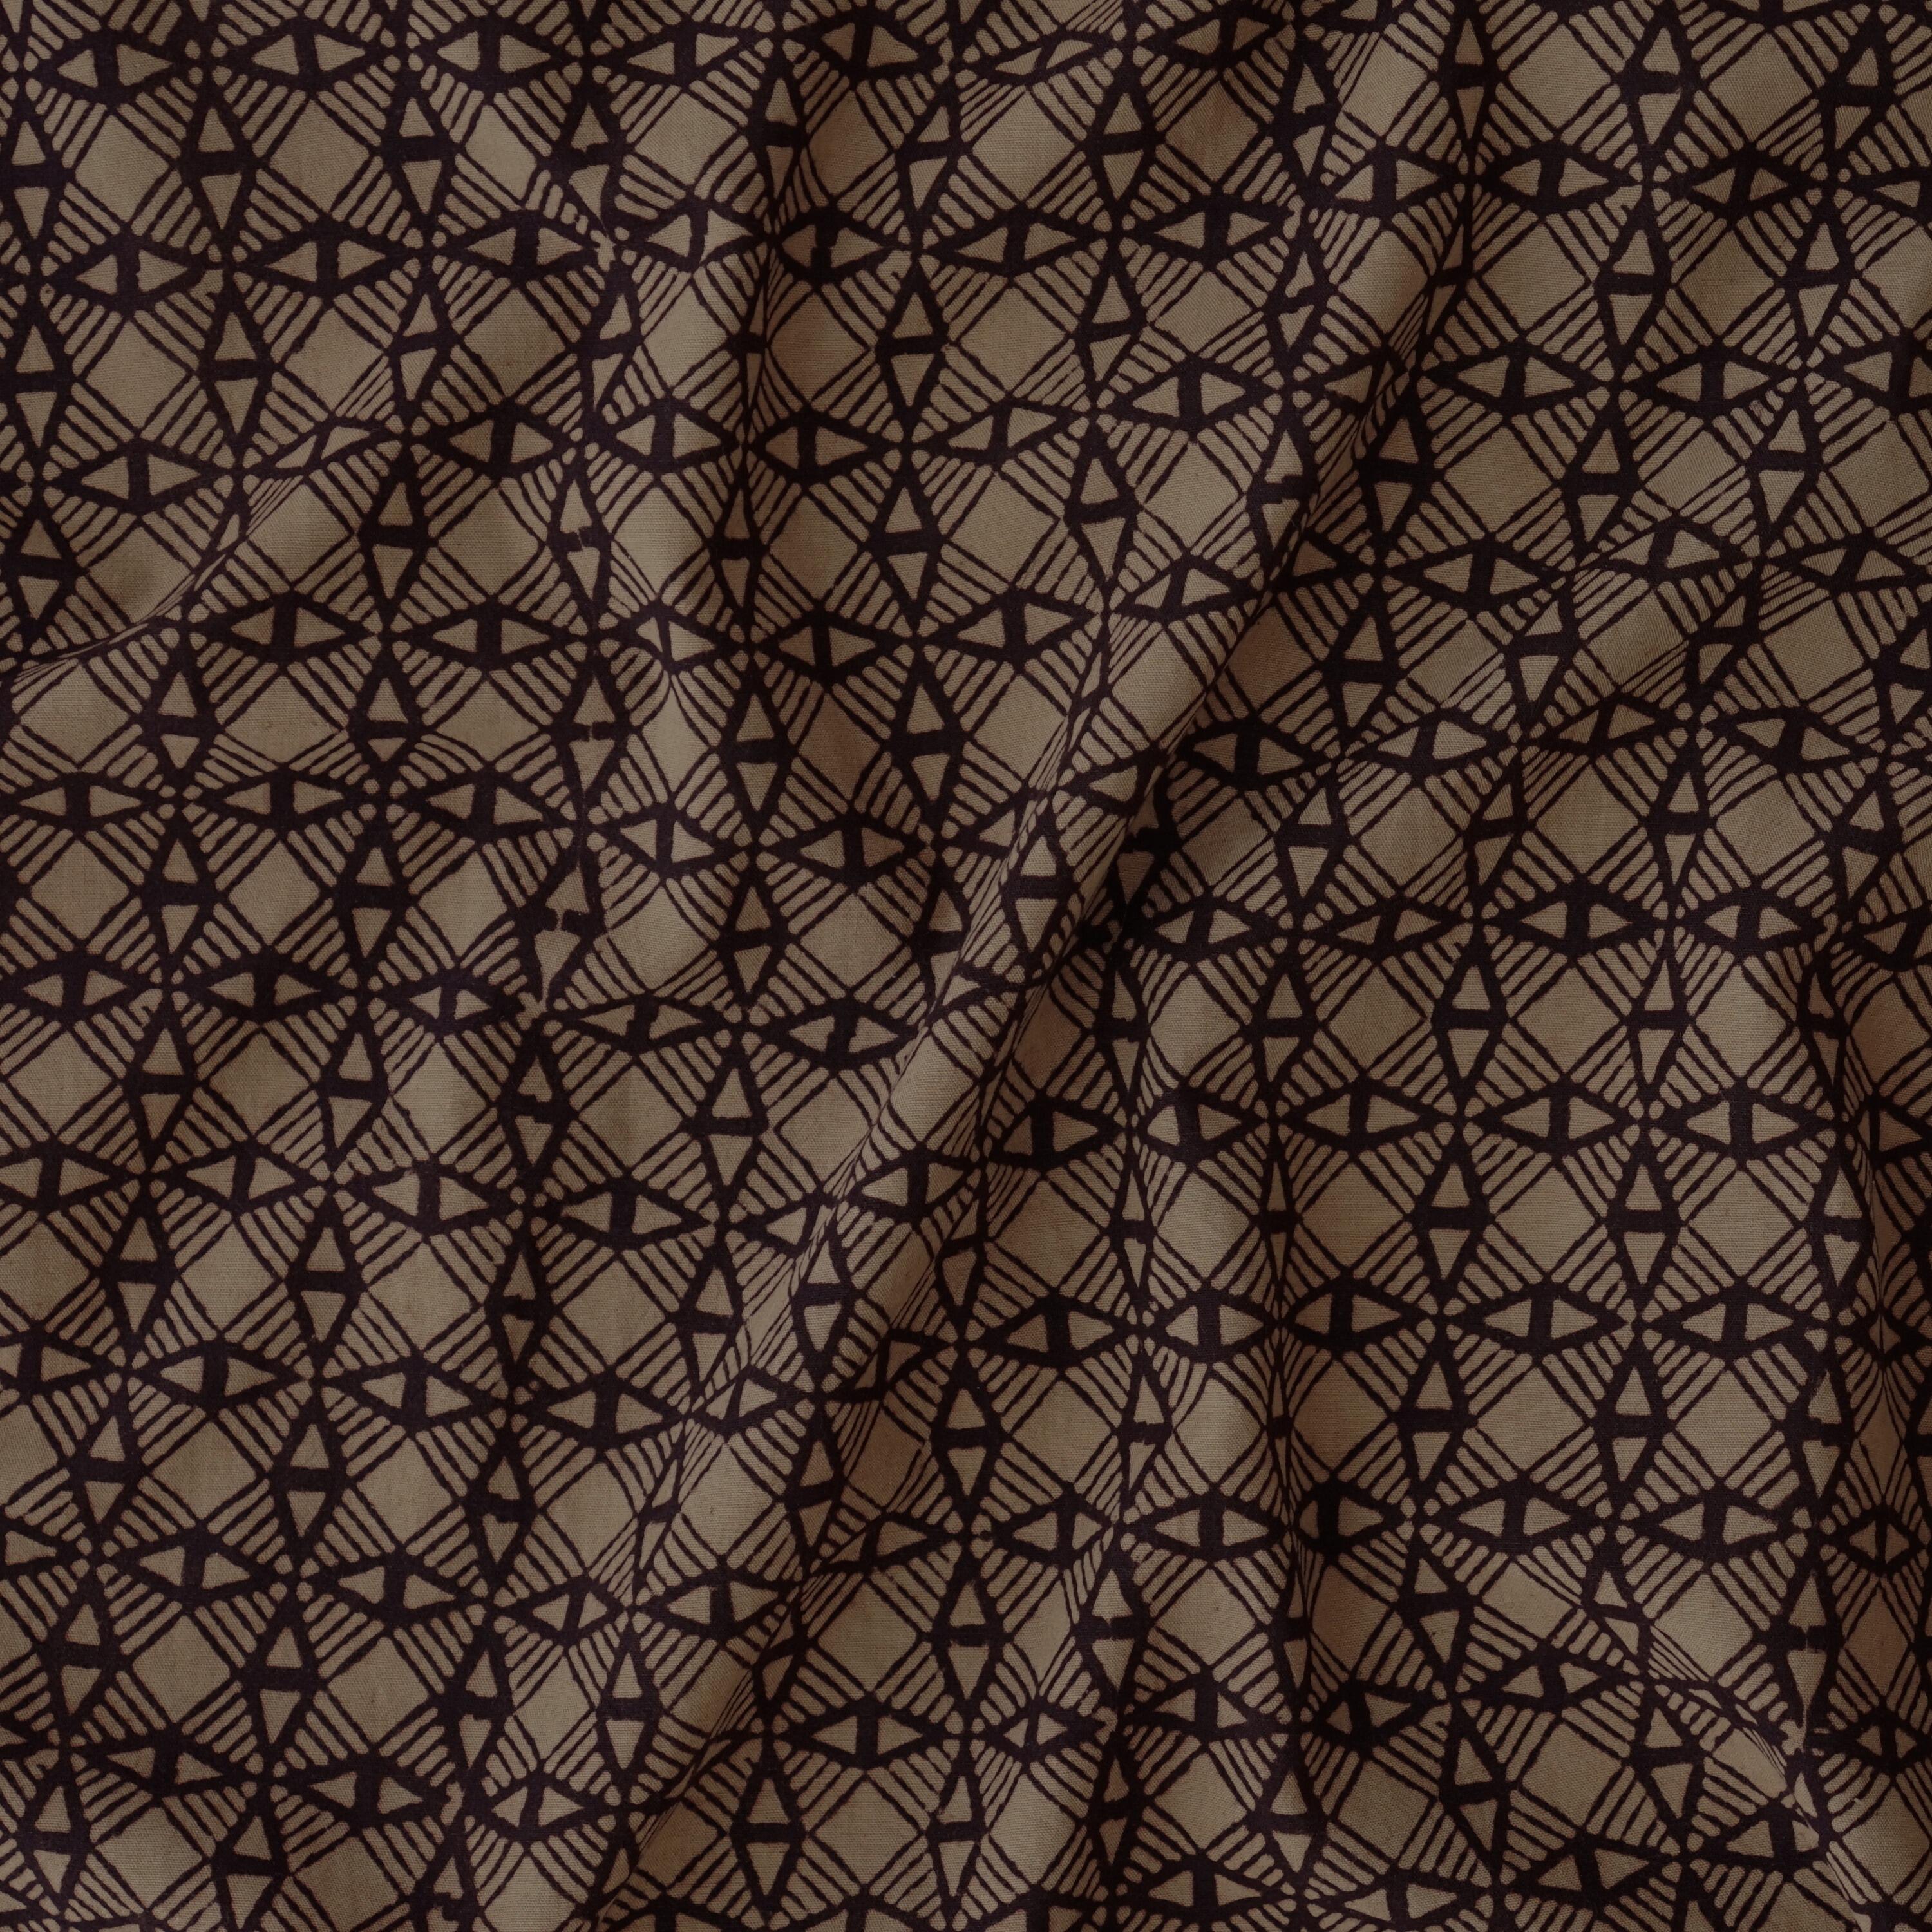 100% Block-Printed Cotton Fabric From India- Bagh - Iron Rust Black & Indigosol Khaki - Big Brother Print - Contrast